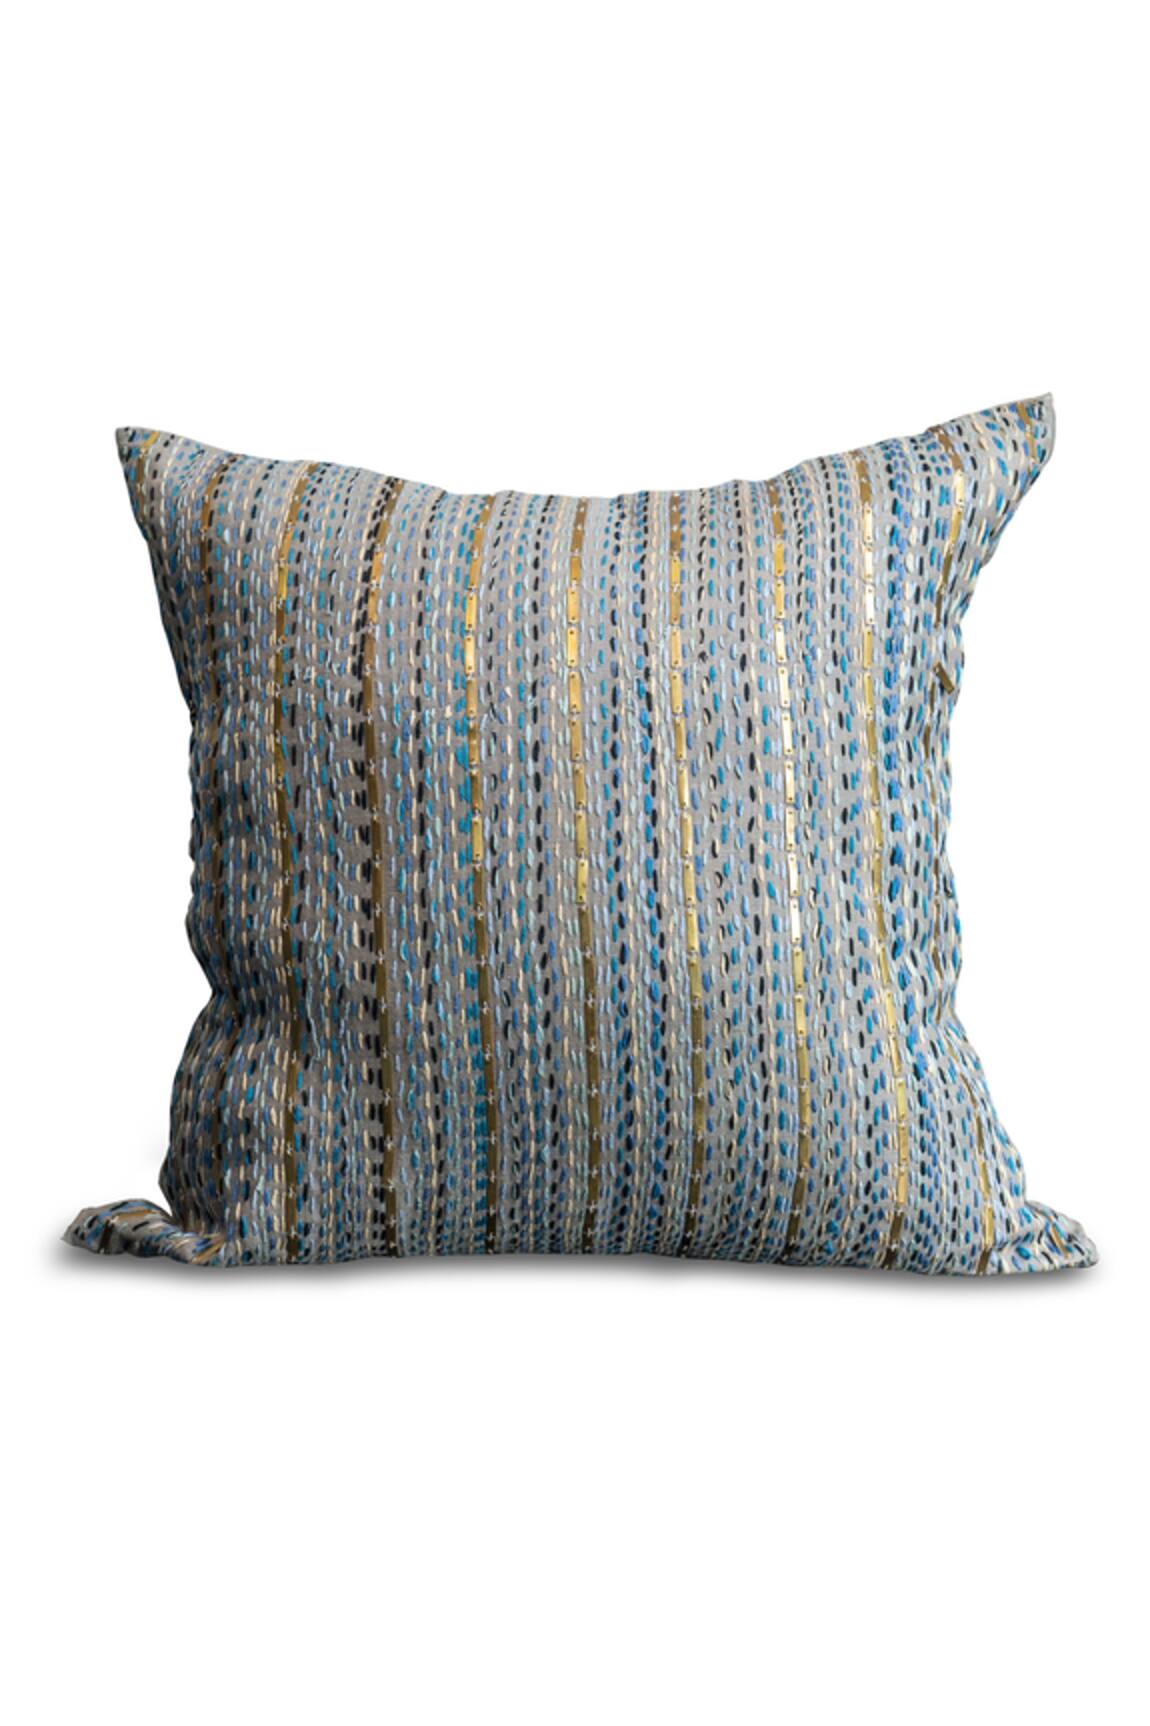 SITTARA WORKZ Lakeer Kantha Embroidered Cushion